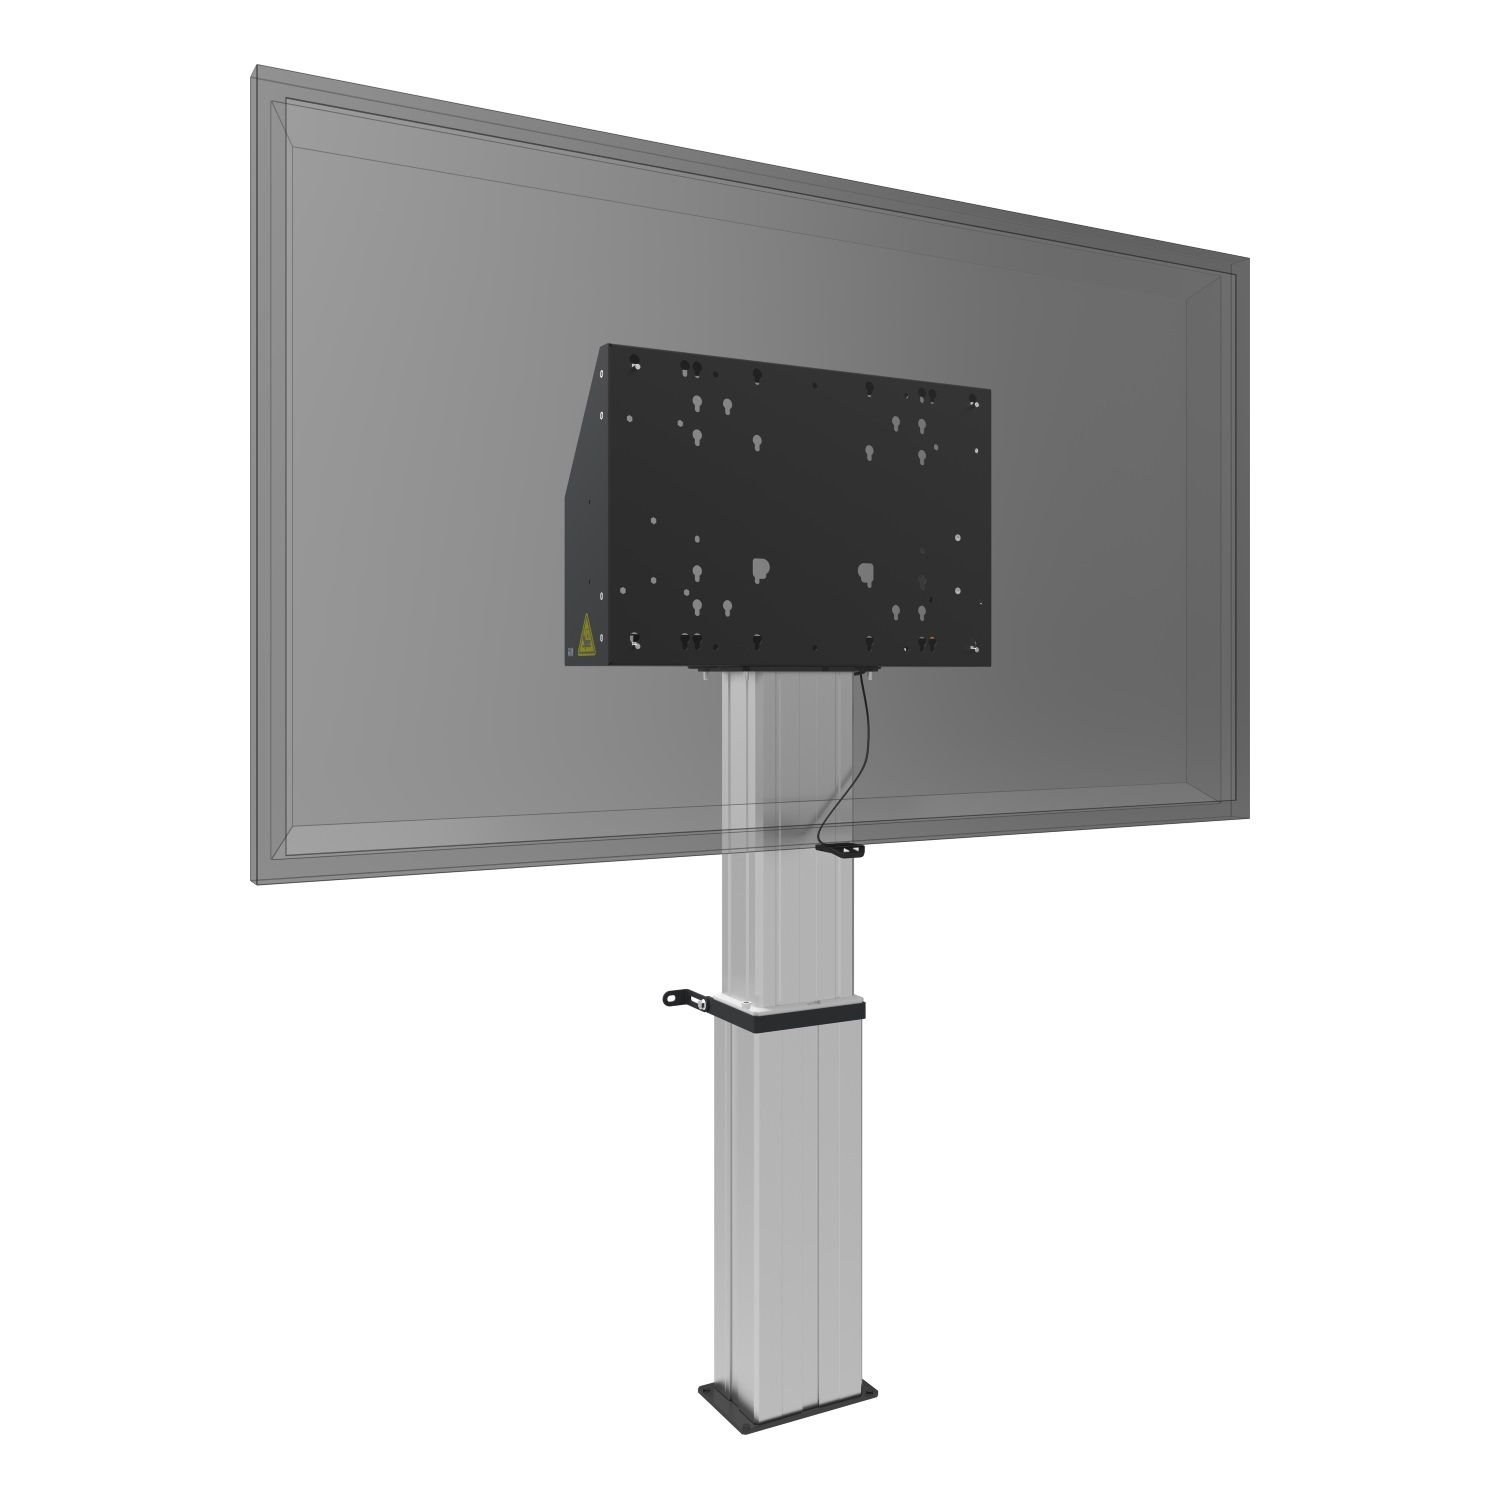 Display holder mini lifting column 86 inch